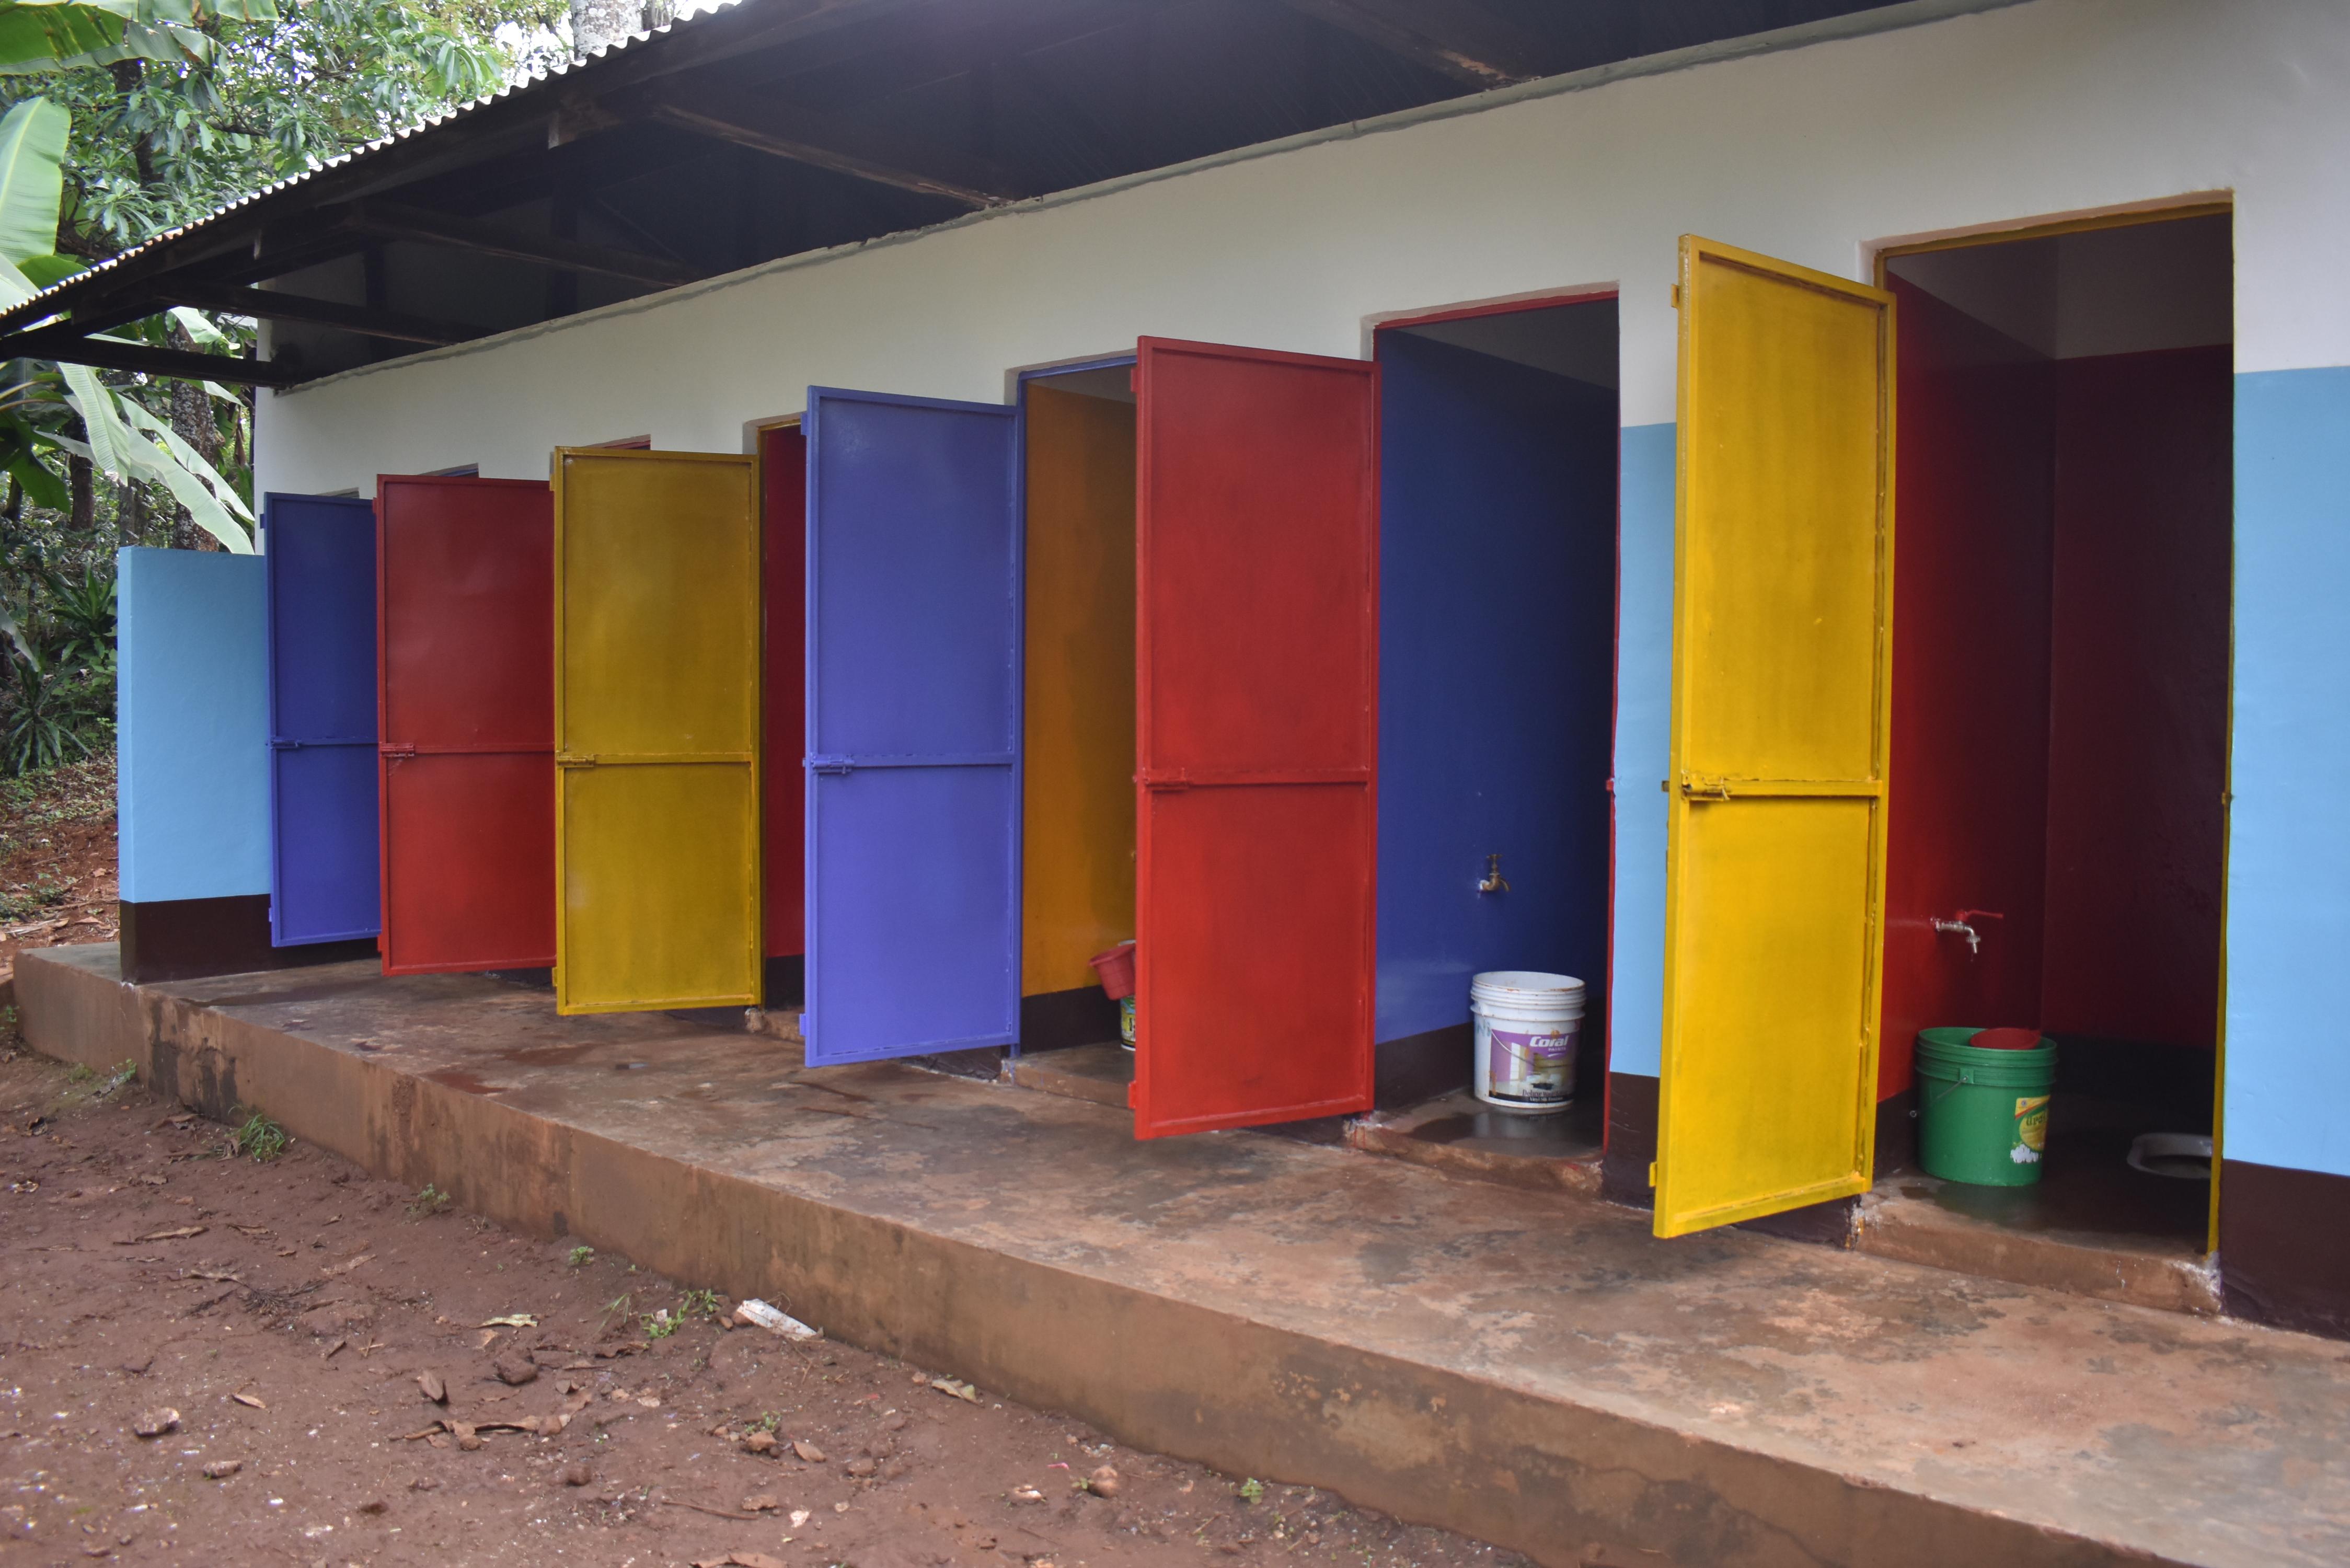  Sia Shimbwe Primary School_Tansania